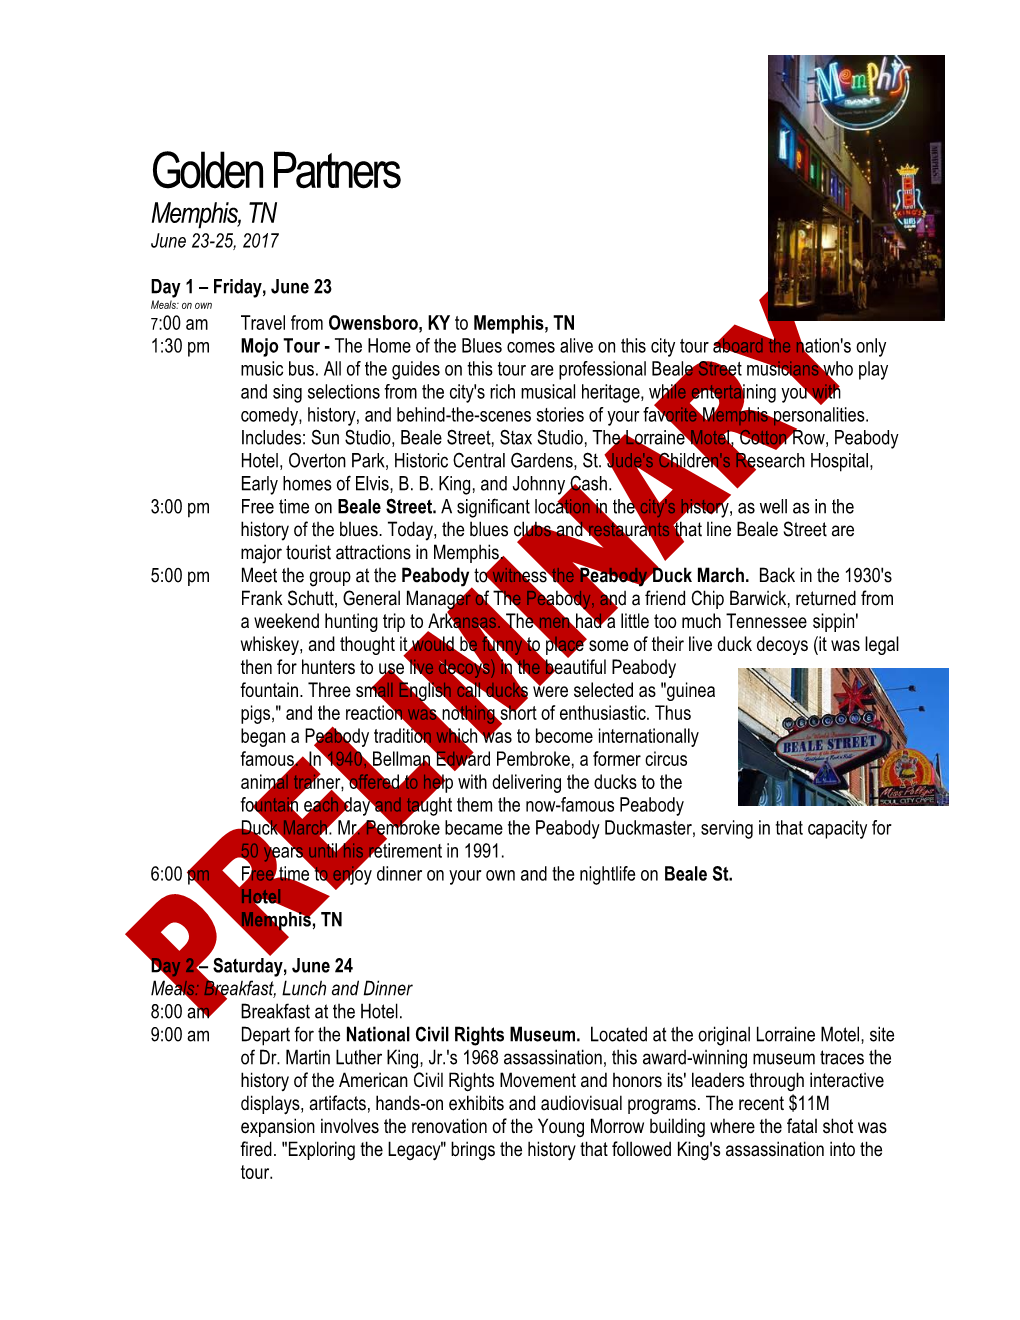 Golden Partners Memphis, TN June 23-25, 2017